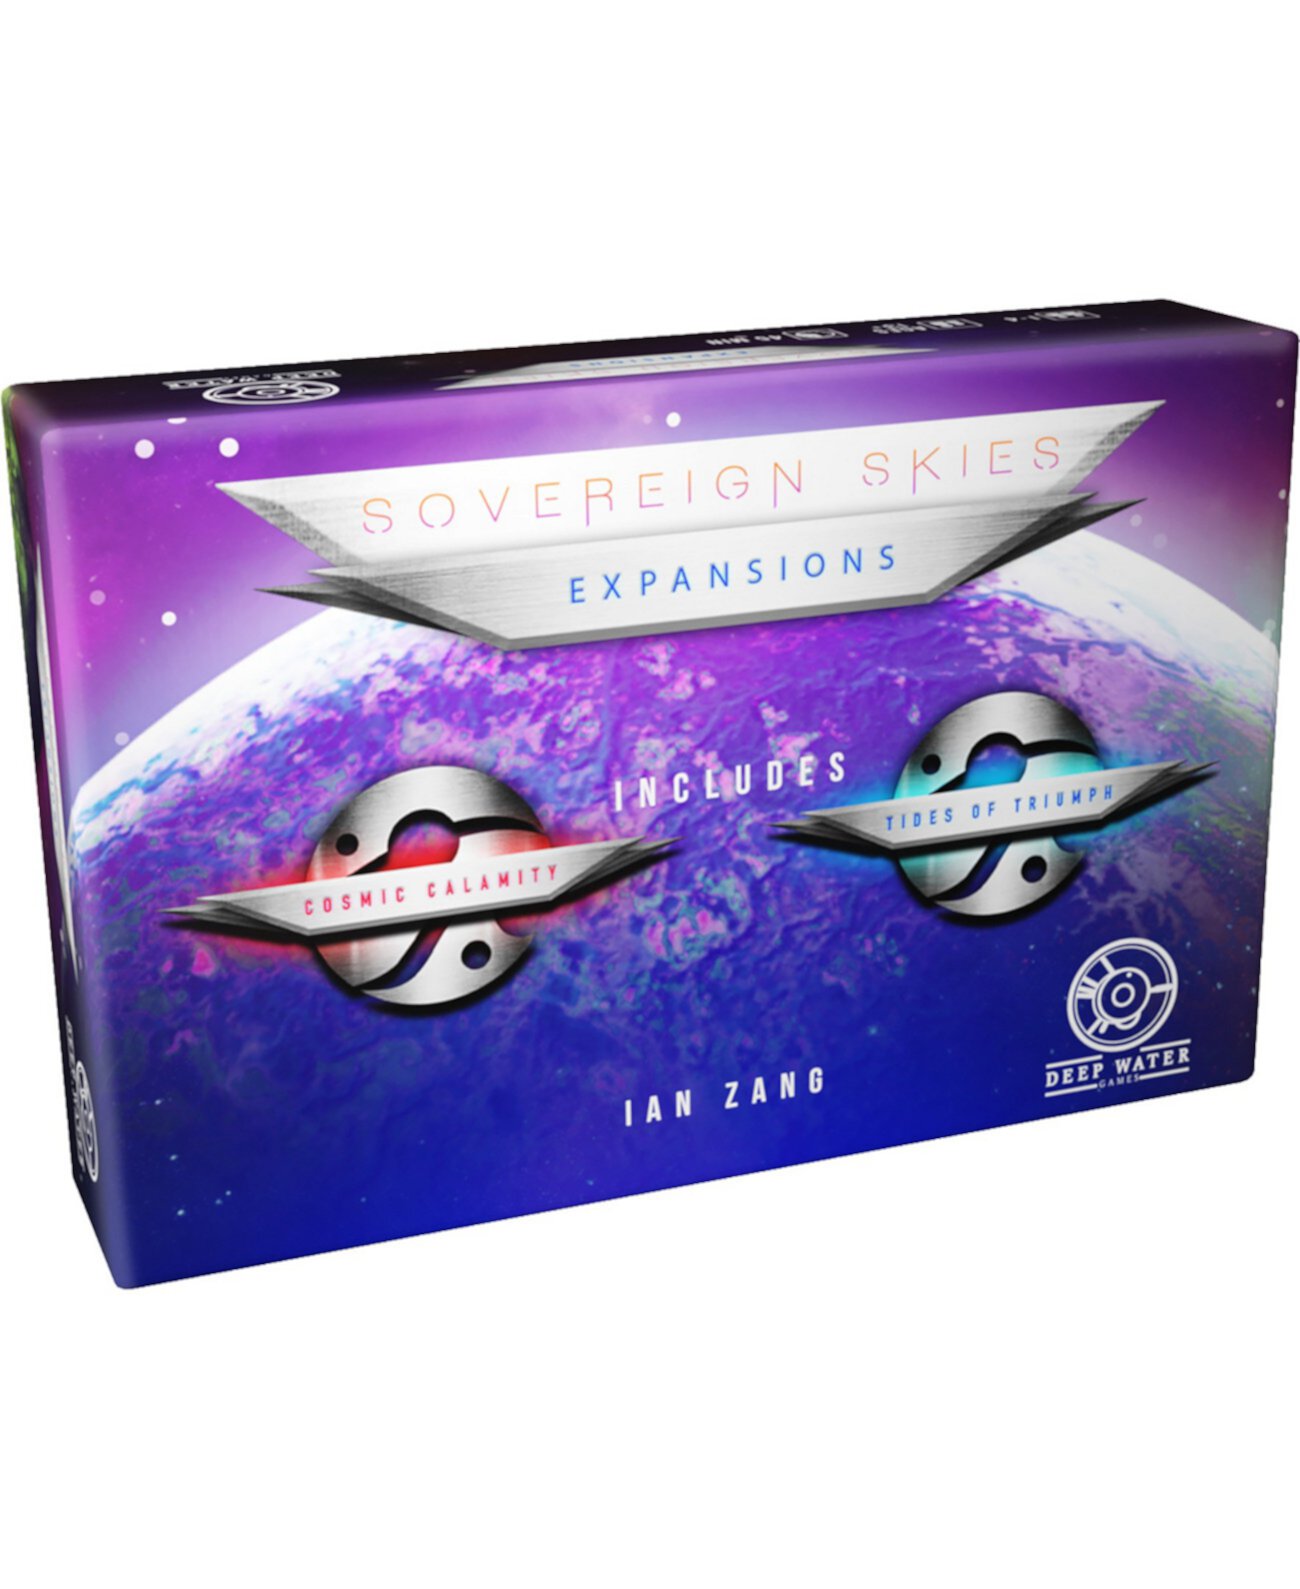 Sovereign Skies Expansions Box Стратегическая настольная игра Expansion Deep Water Games